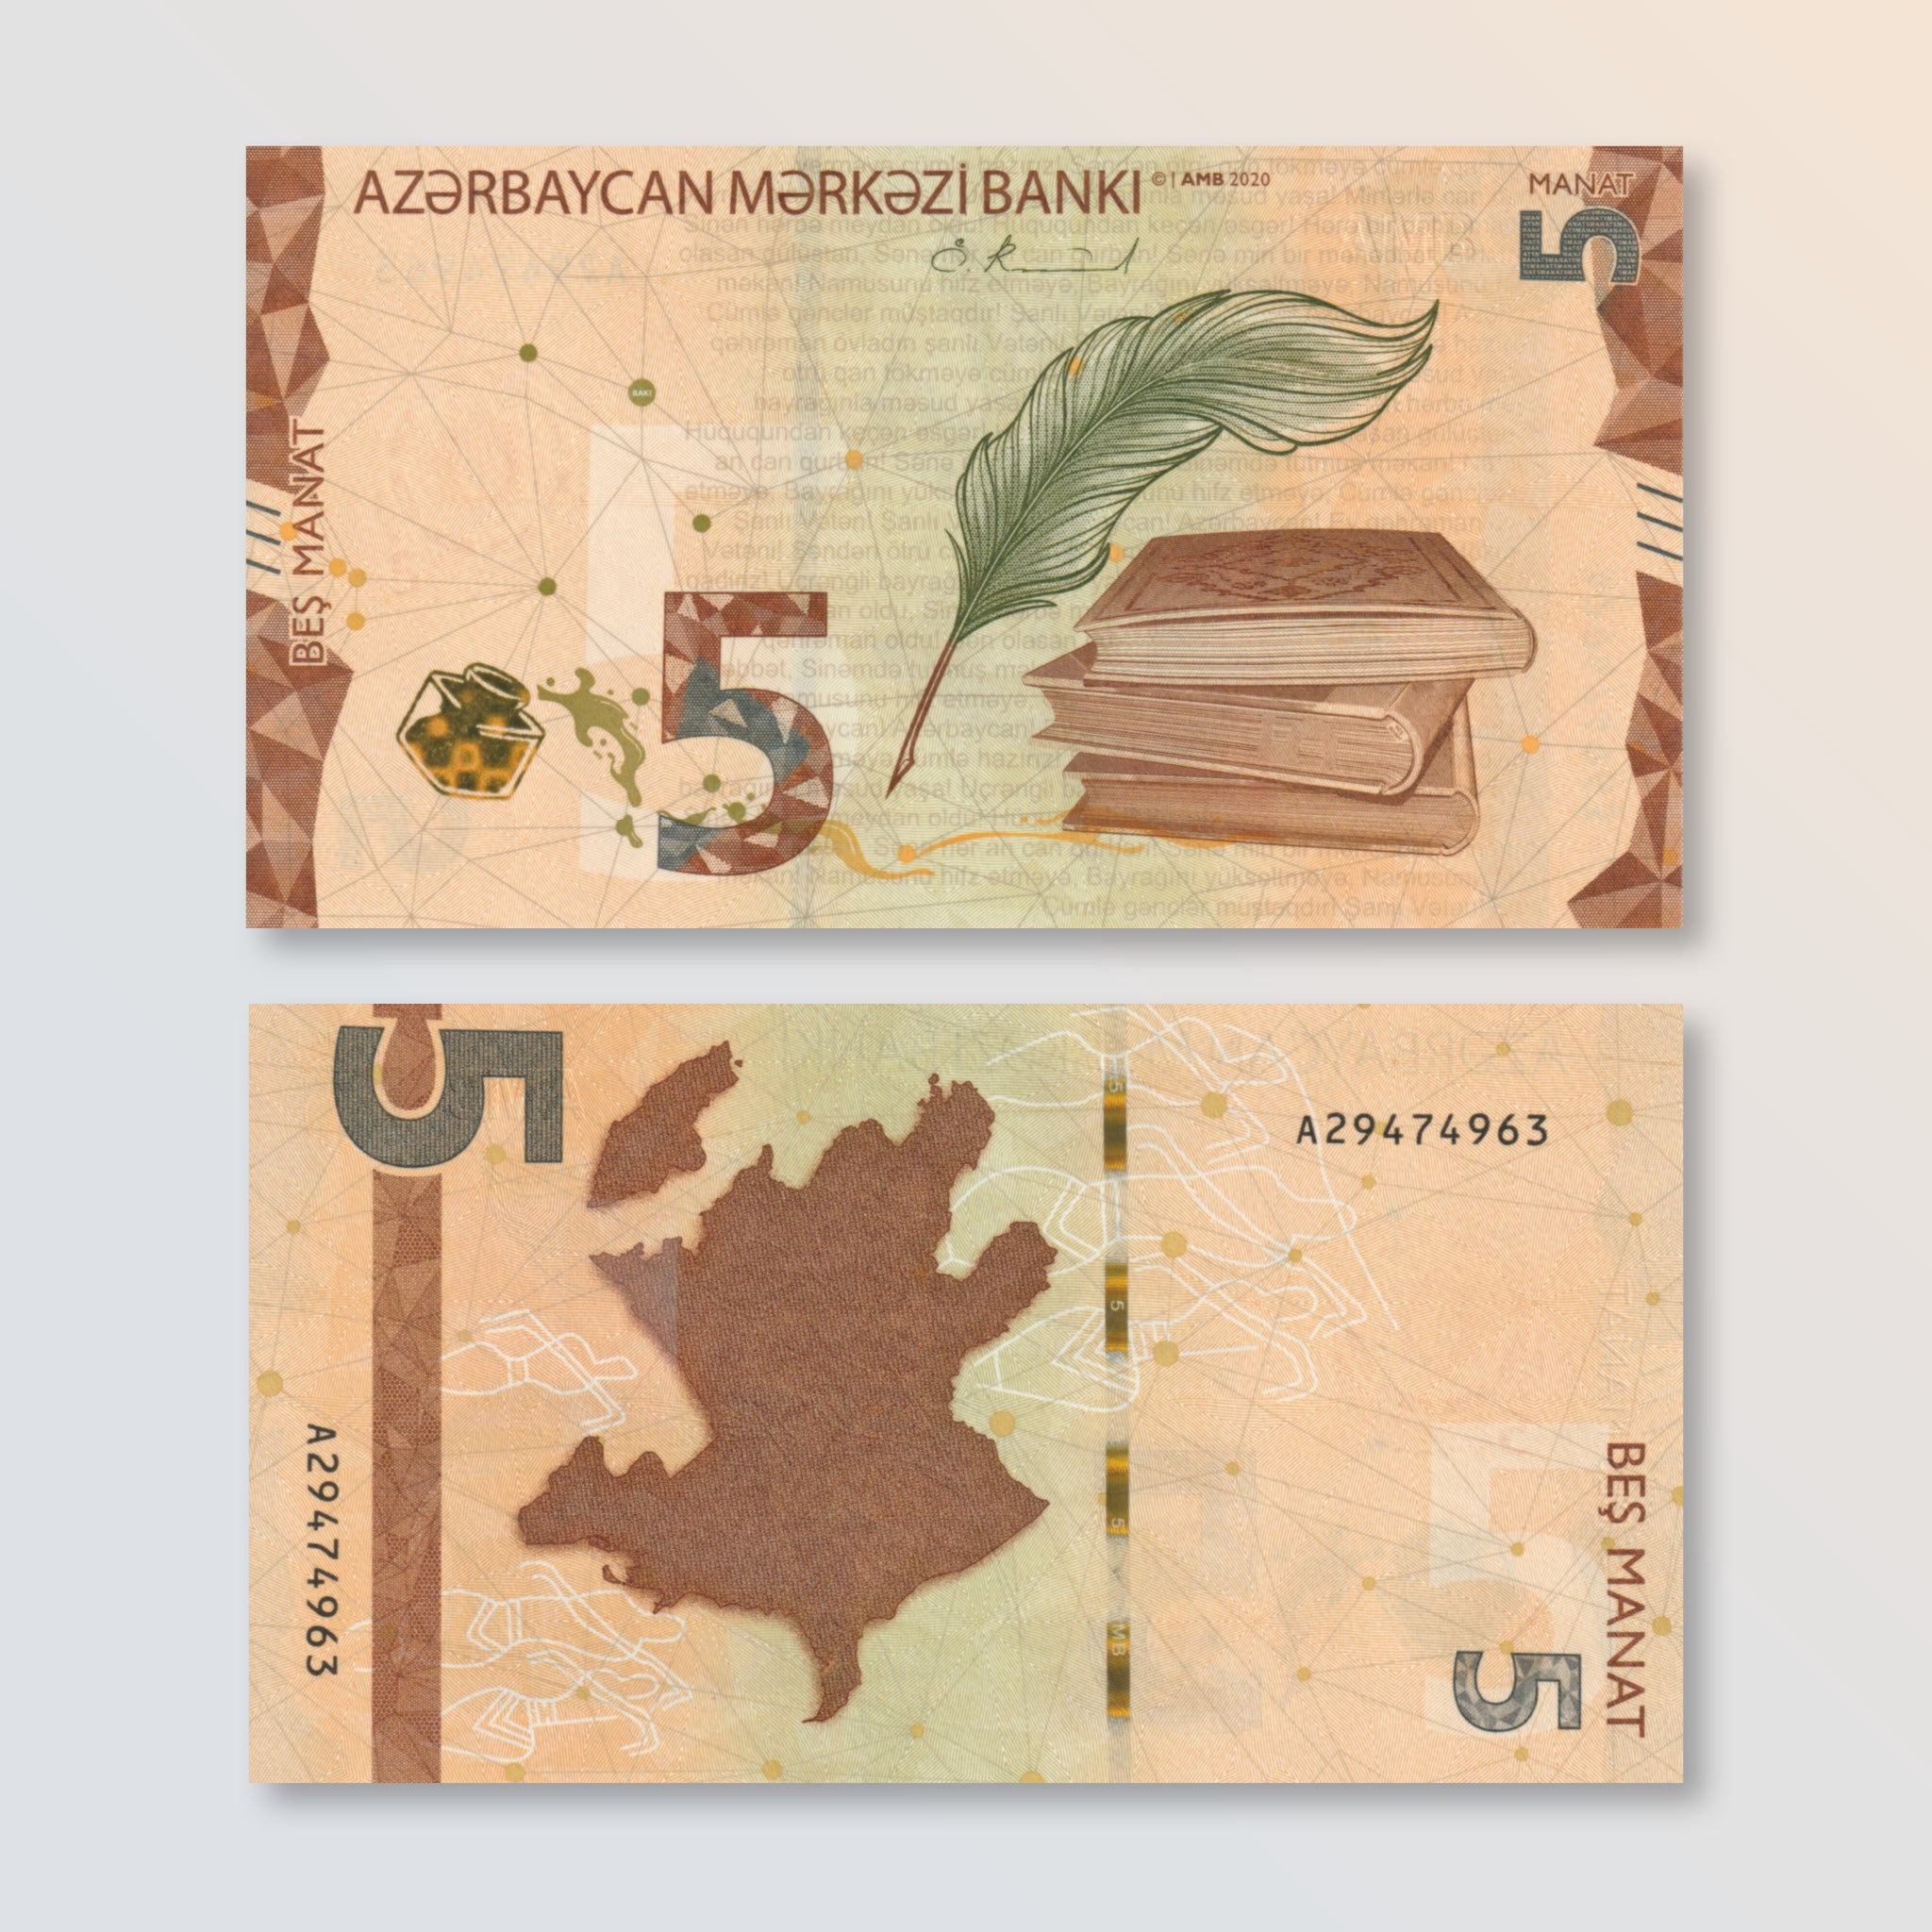 Azerbaijan 5 Manat, 2020, B409a, UNC - Robert's World Money - World Banknotes